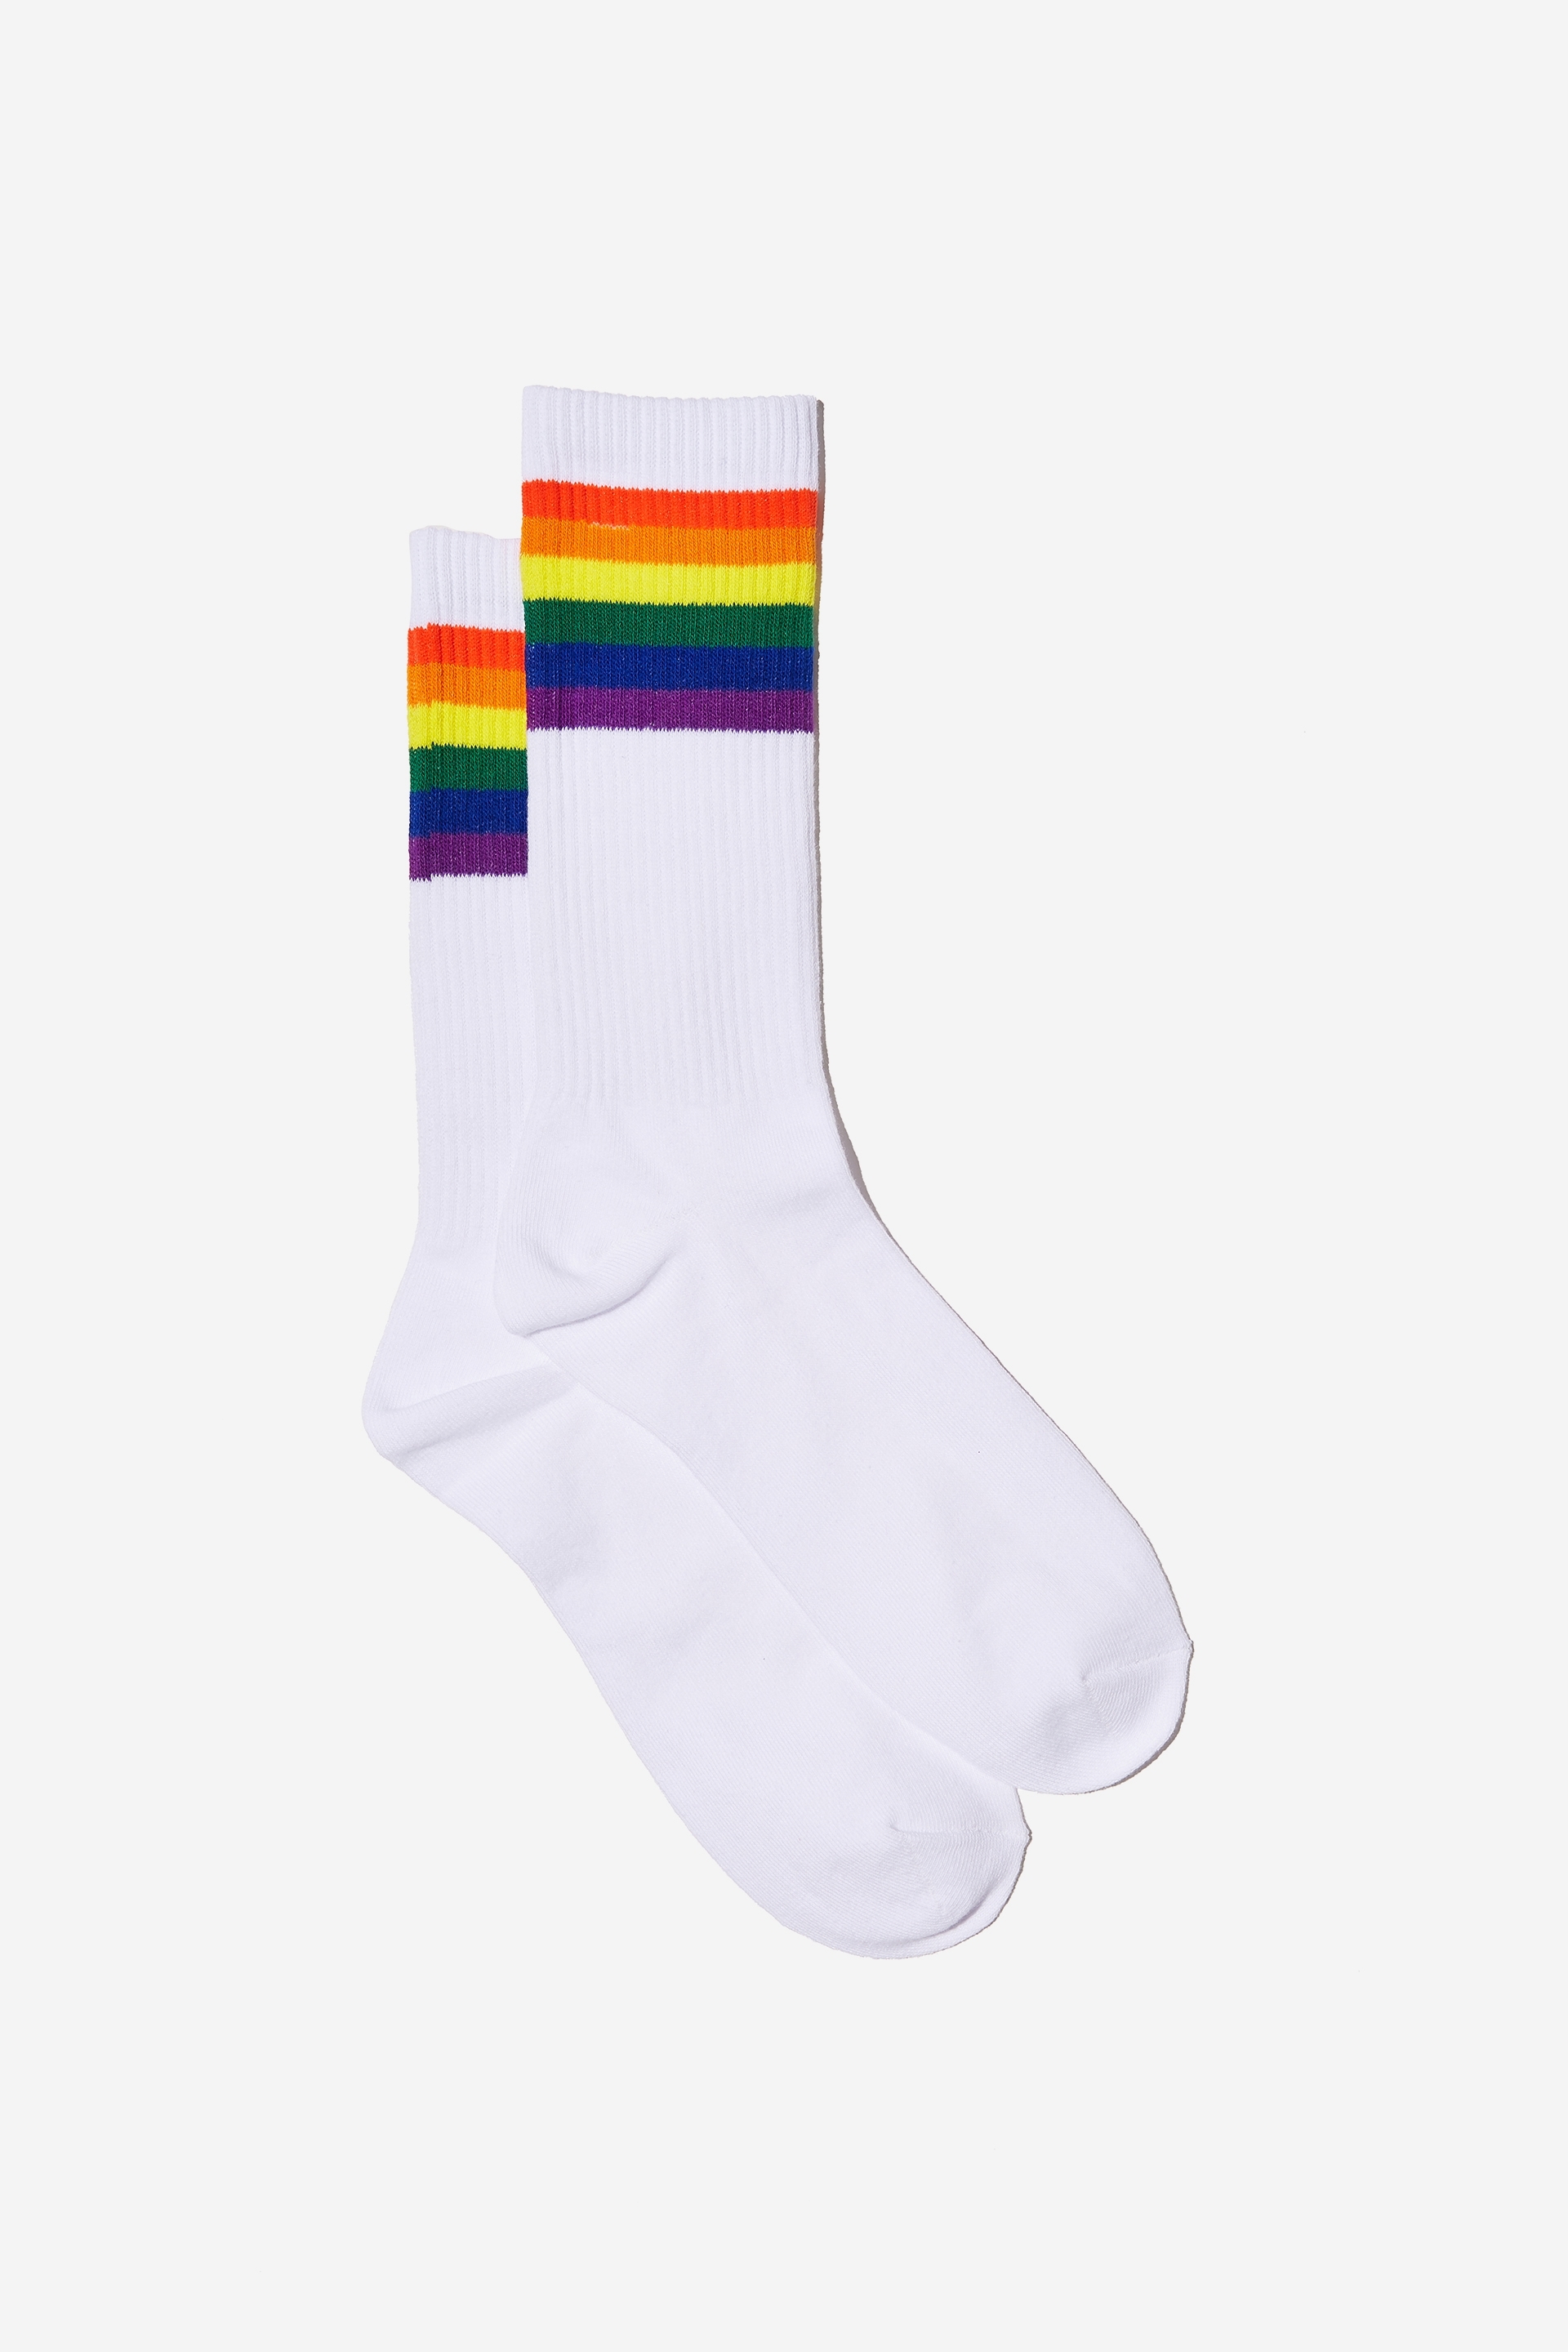 Typo - Socks - Rainbow tube white